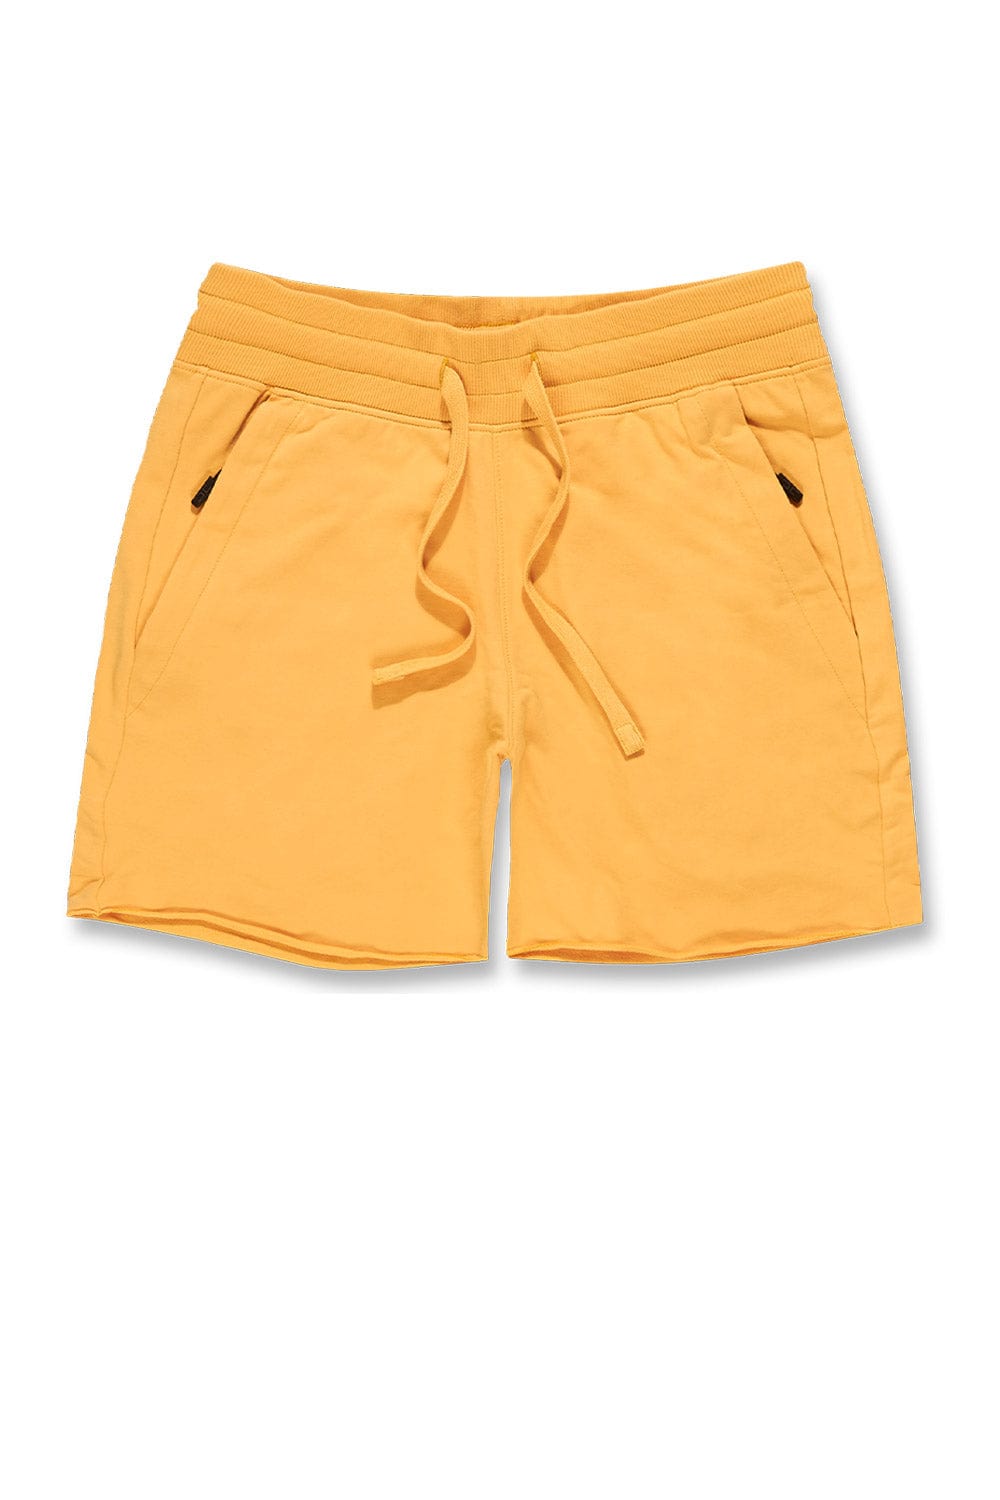 Jordan Craig Athletic - Summer Breeze Knit Shorts (Memorial Day Markdown) Matte Orange / S